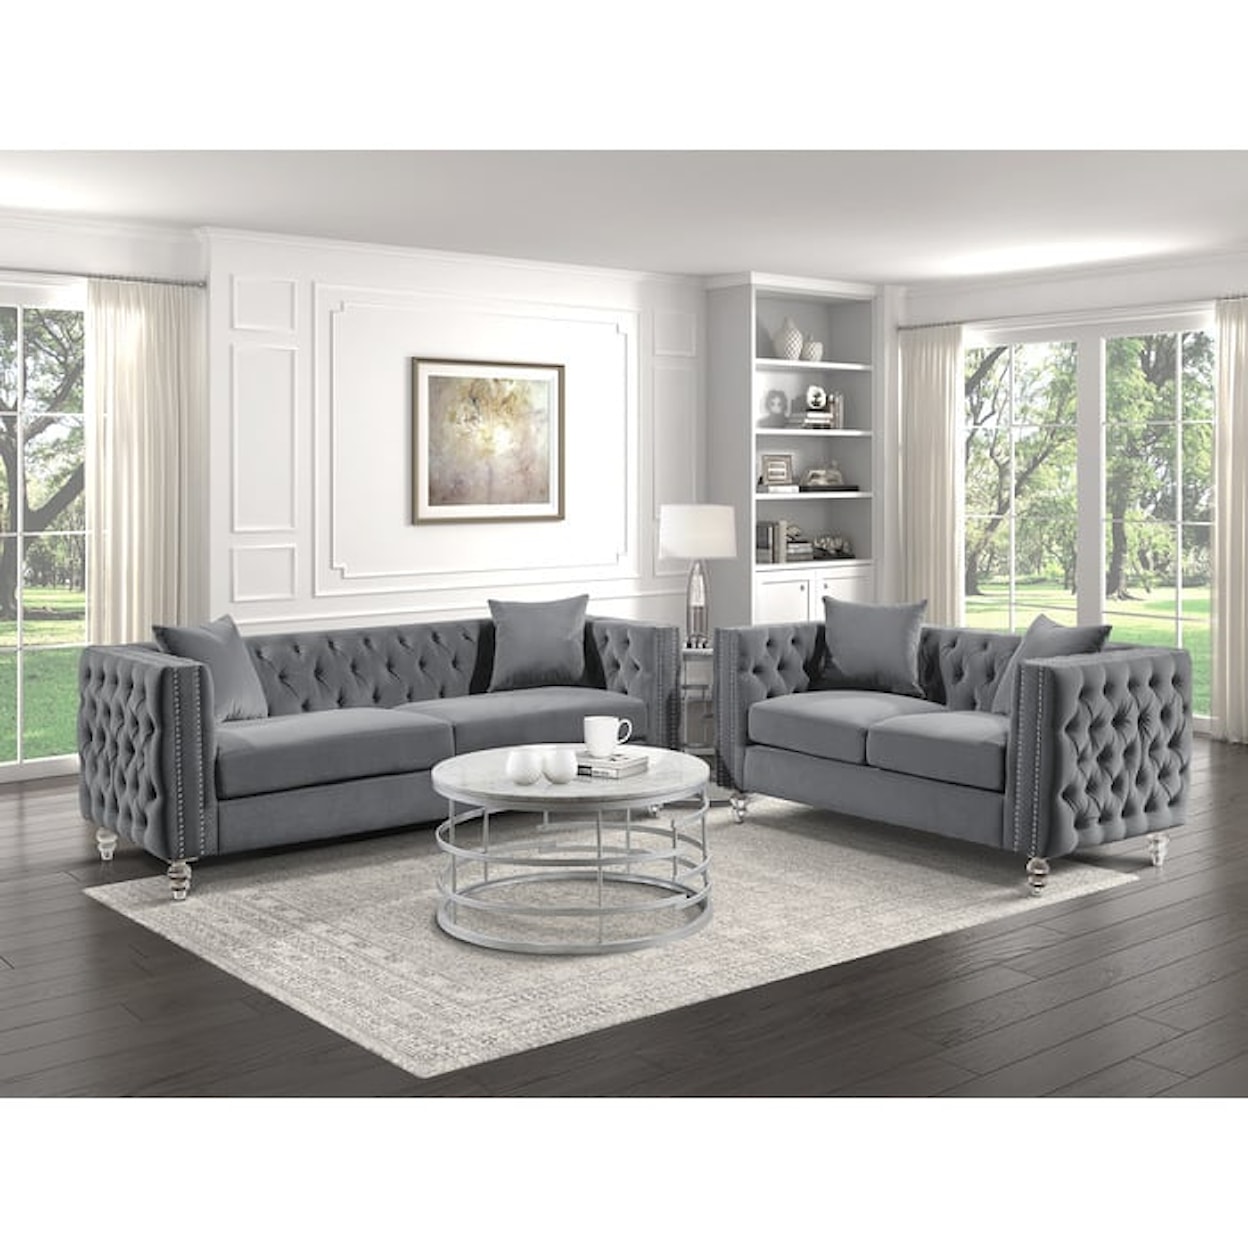 Homelegance Orina 2-Piece Living Room Set